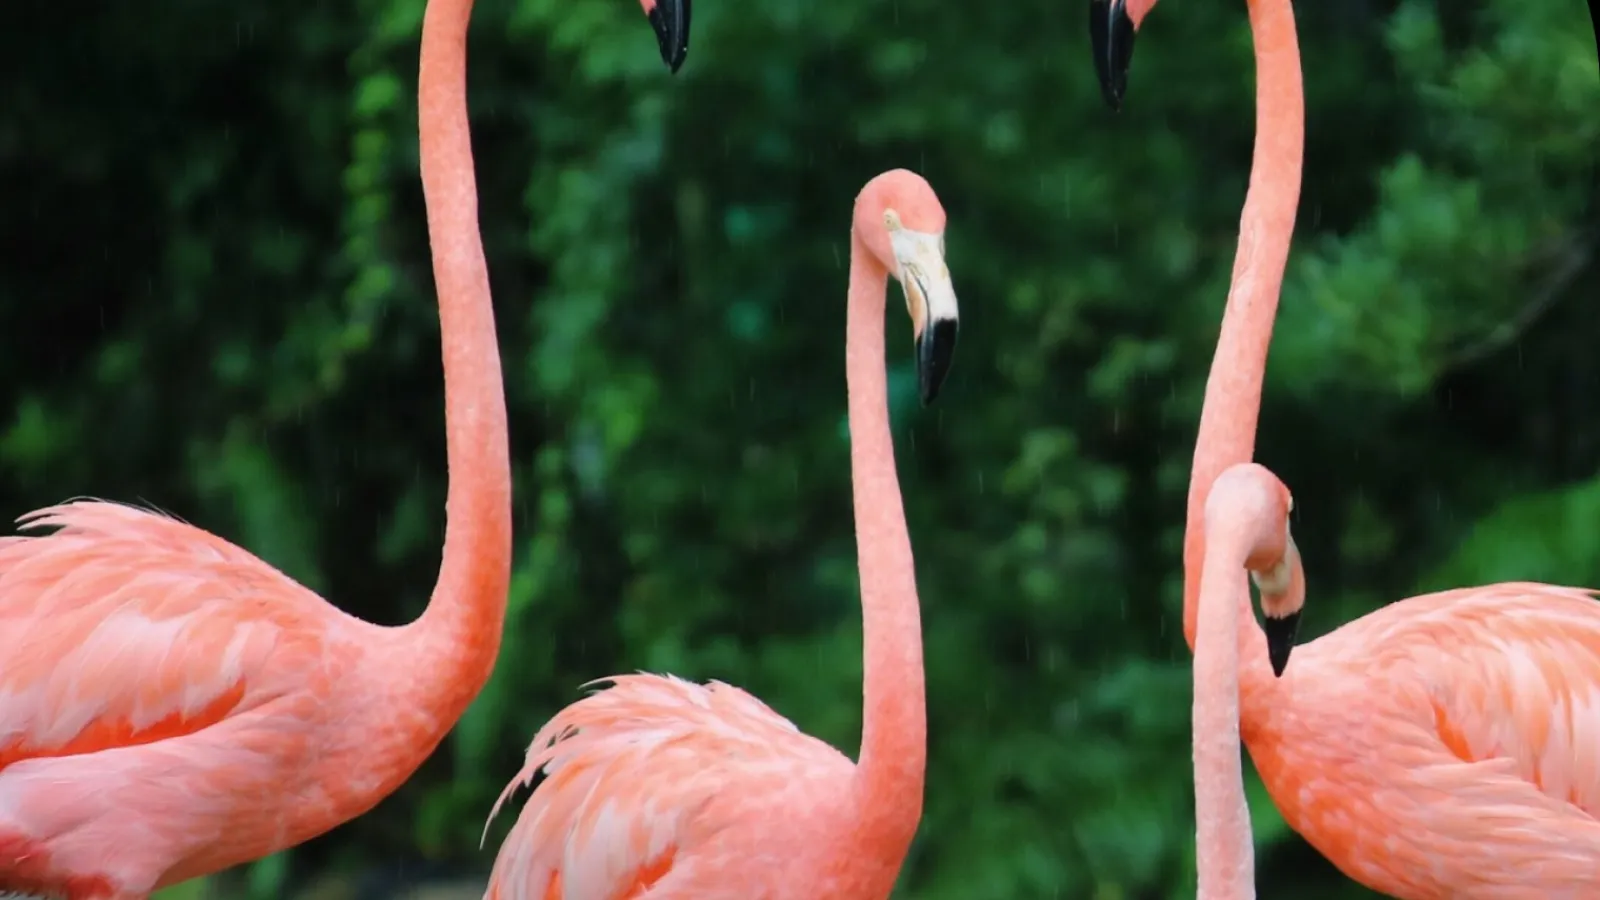 a group of flamingos